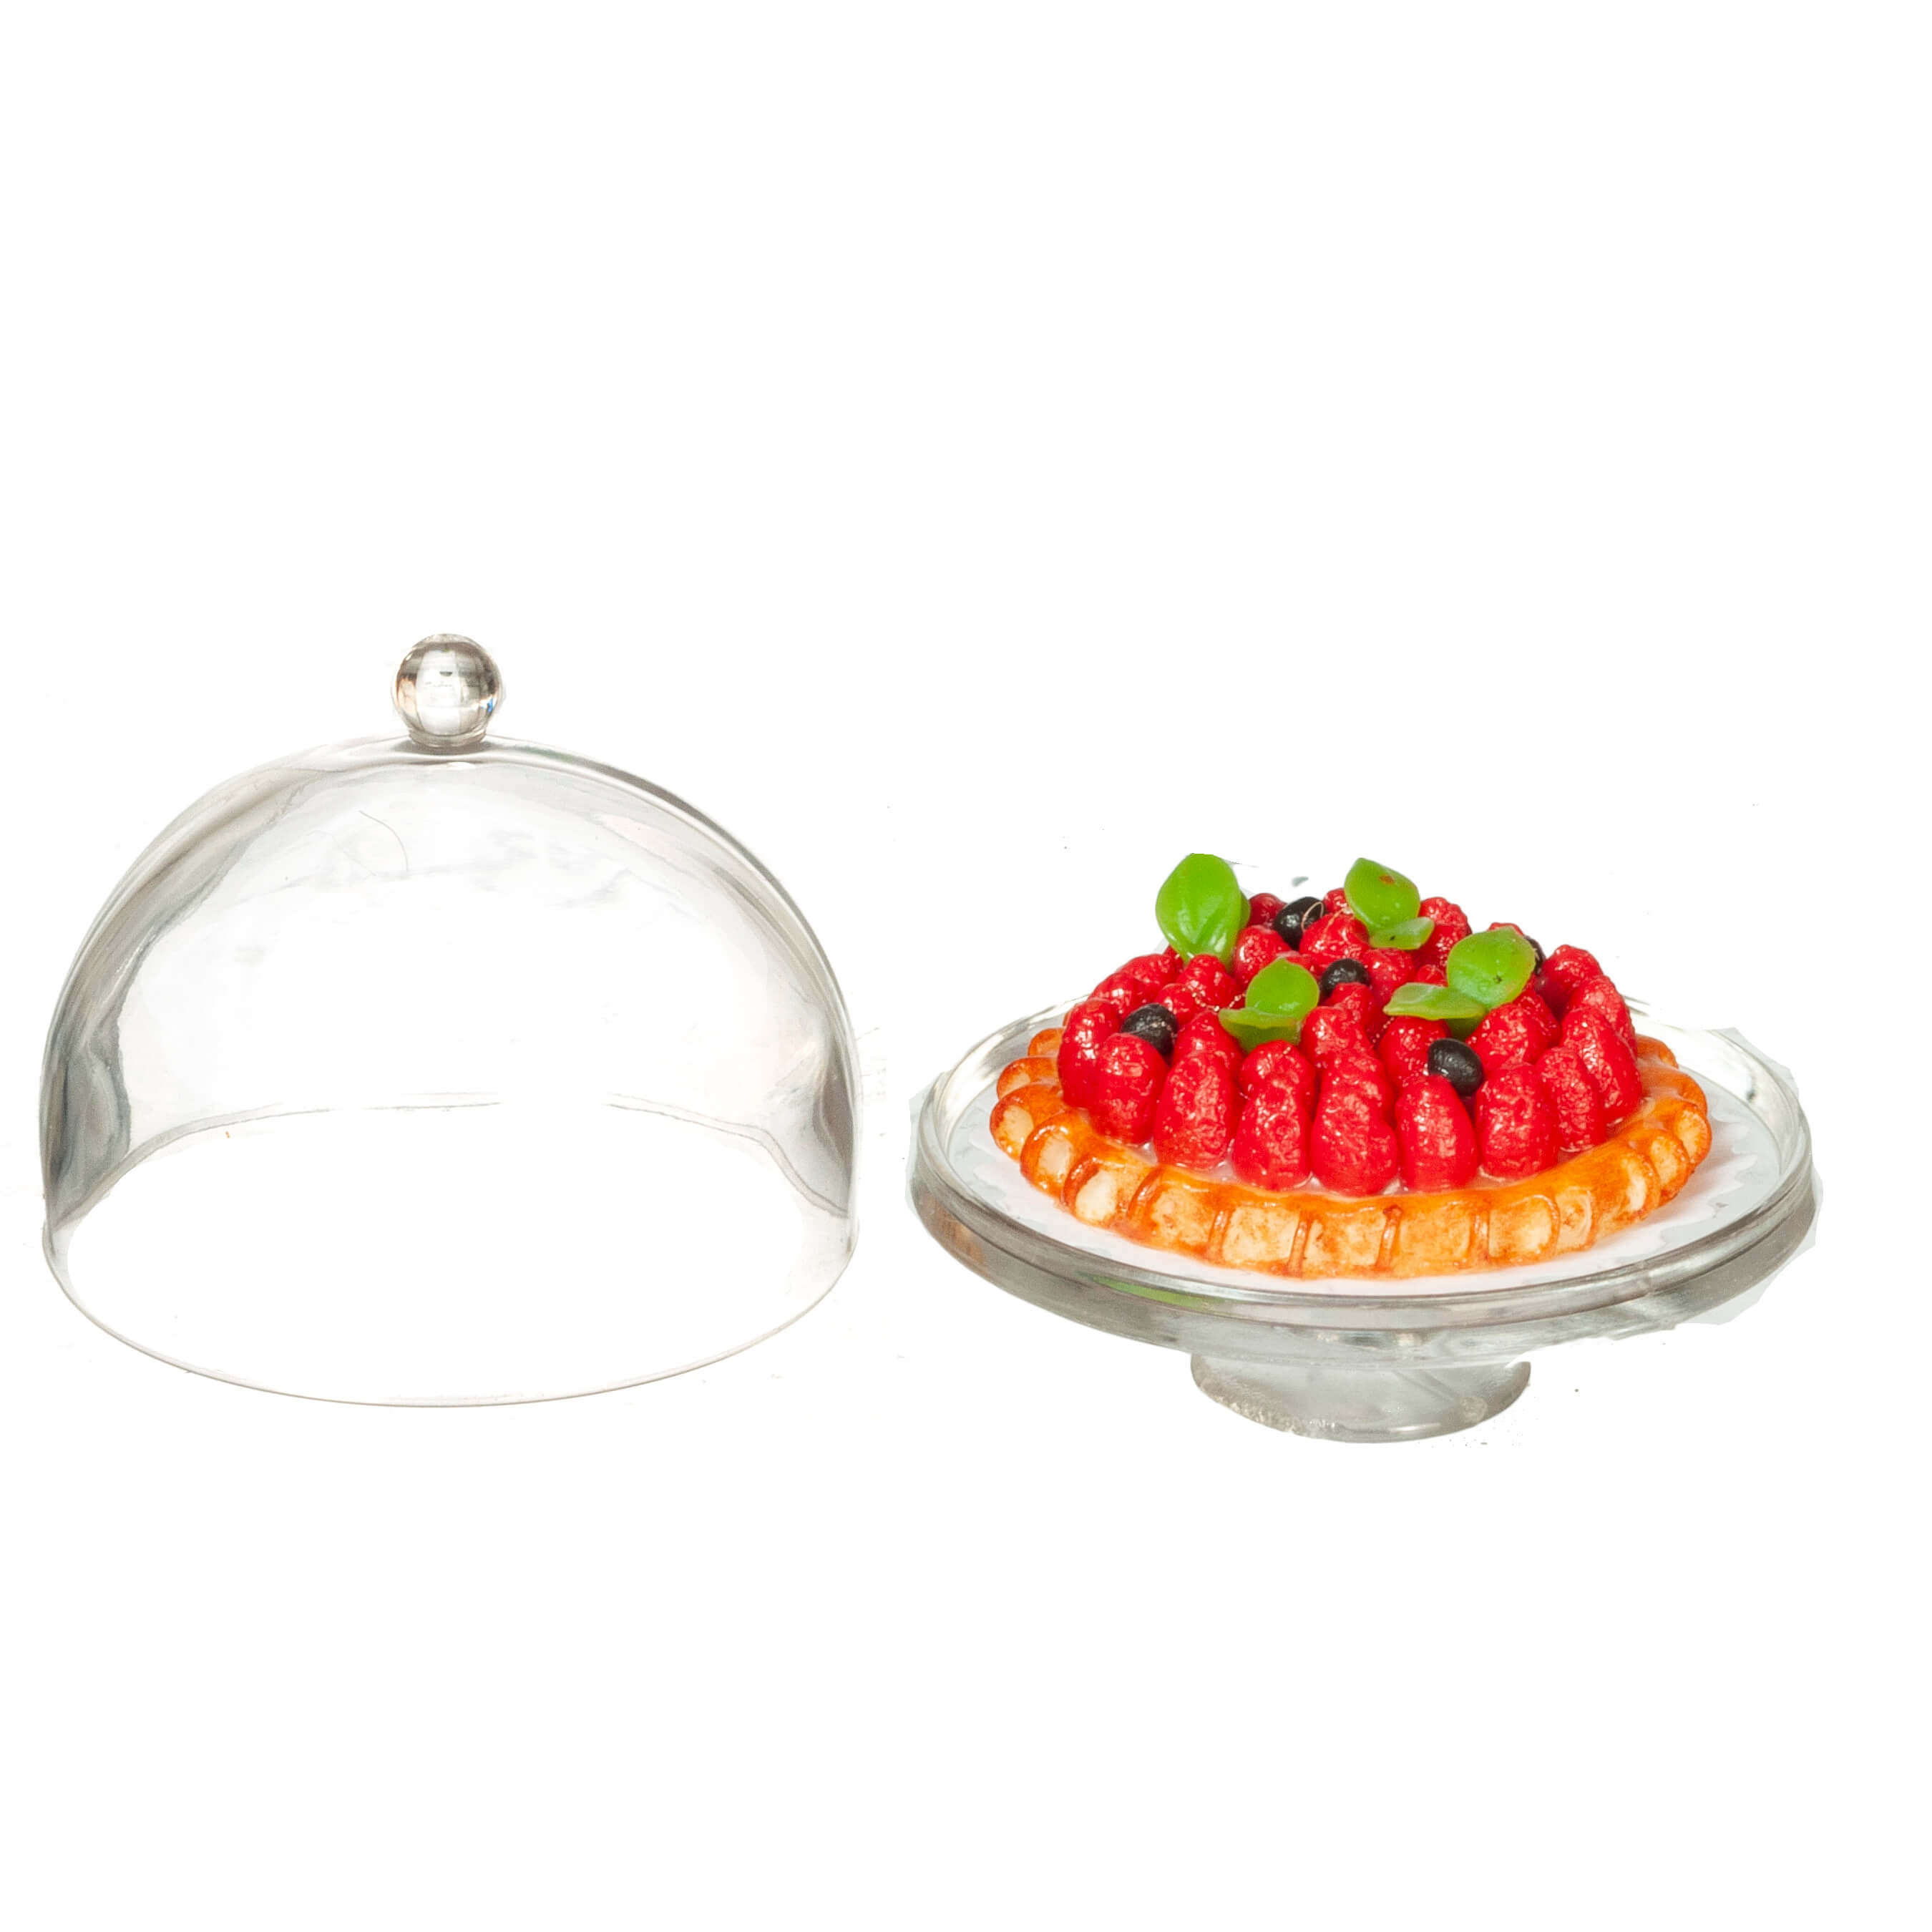 Fruit Tart on Glass Domed Stand